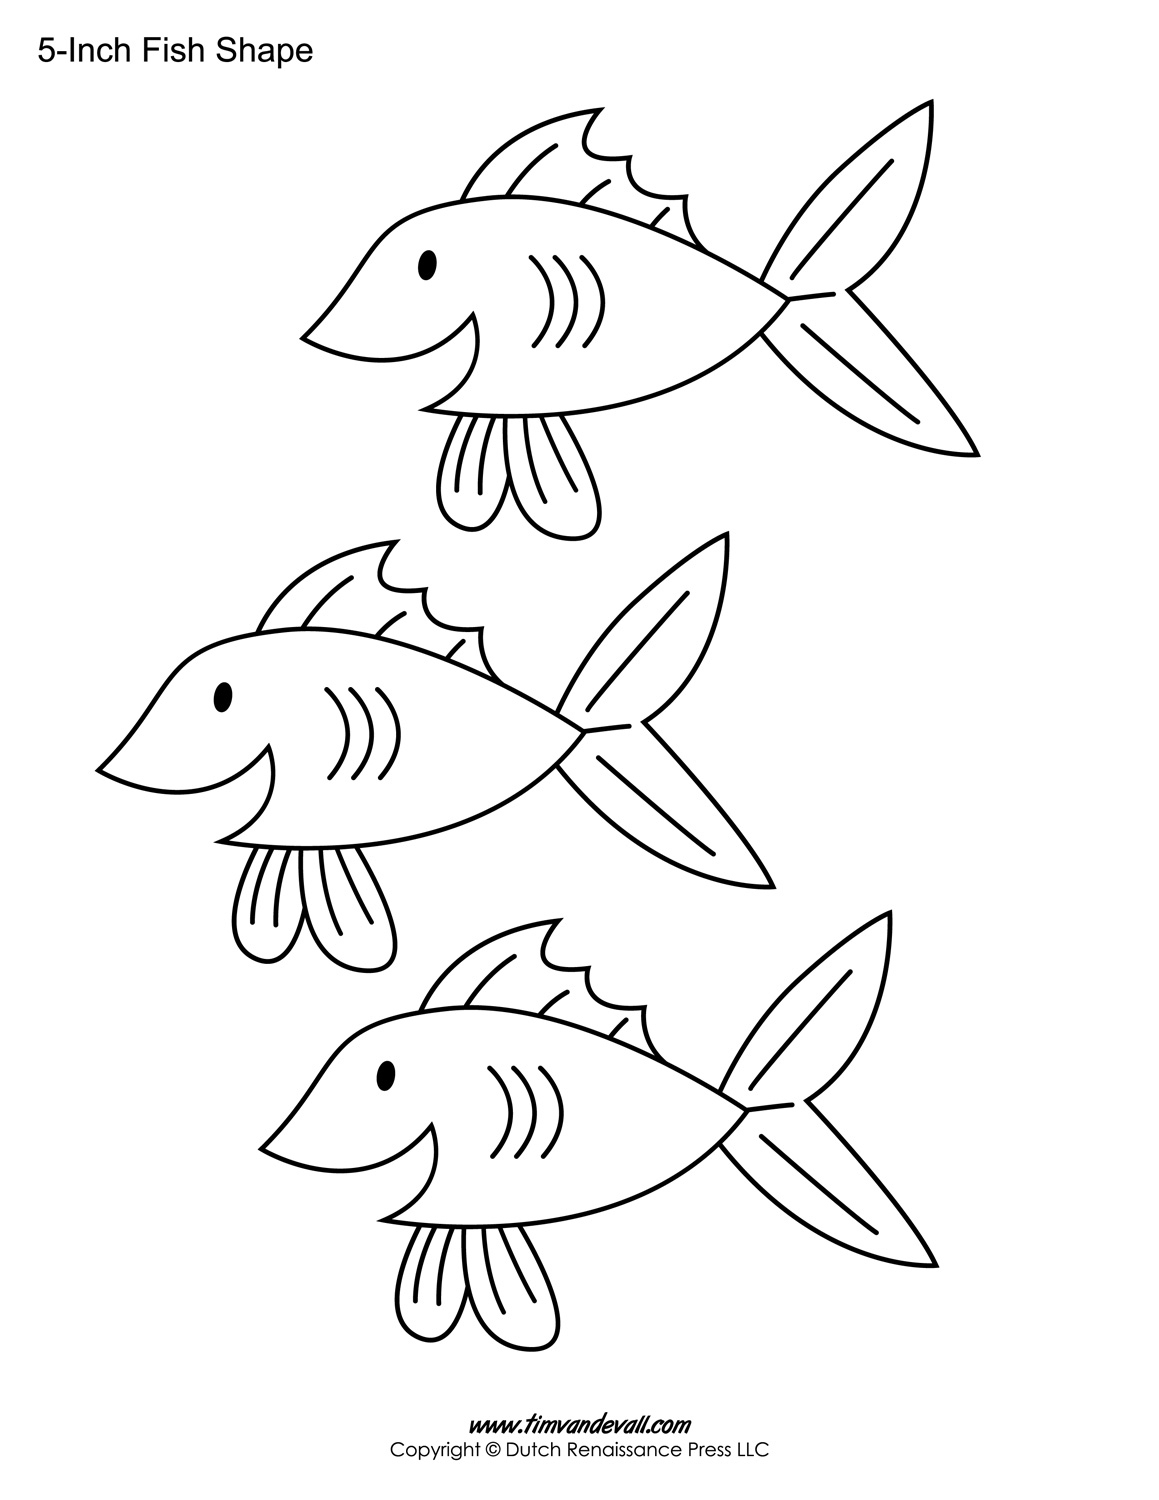 Printable Fish Templates For Kids | Preschool Fish Shapes - Free Printable Fish Stencils